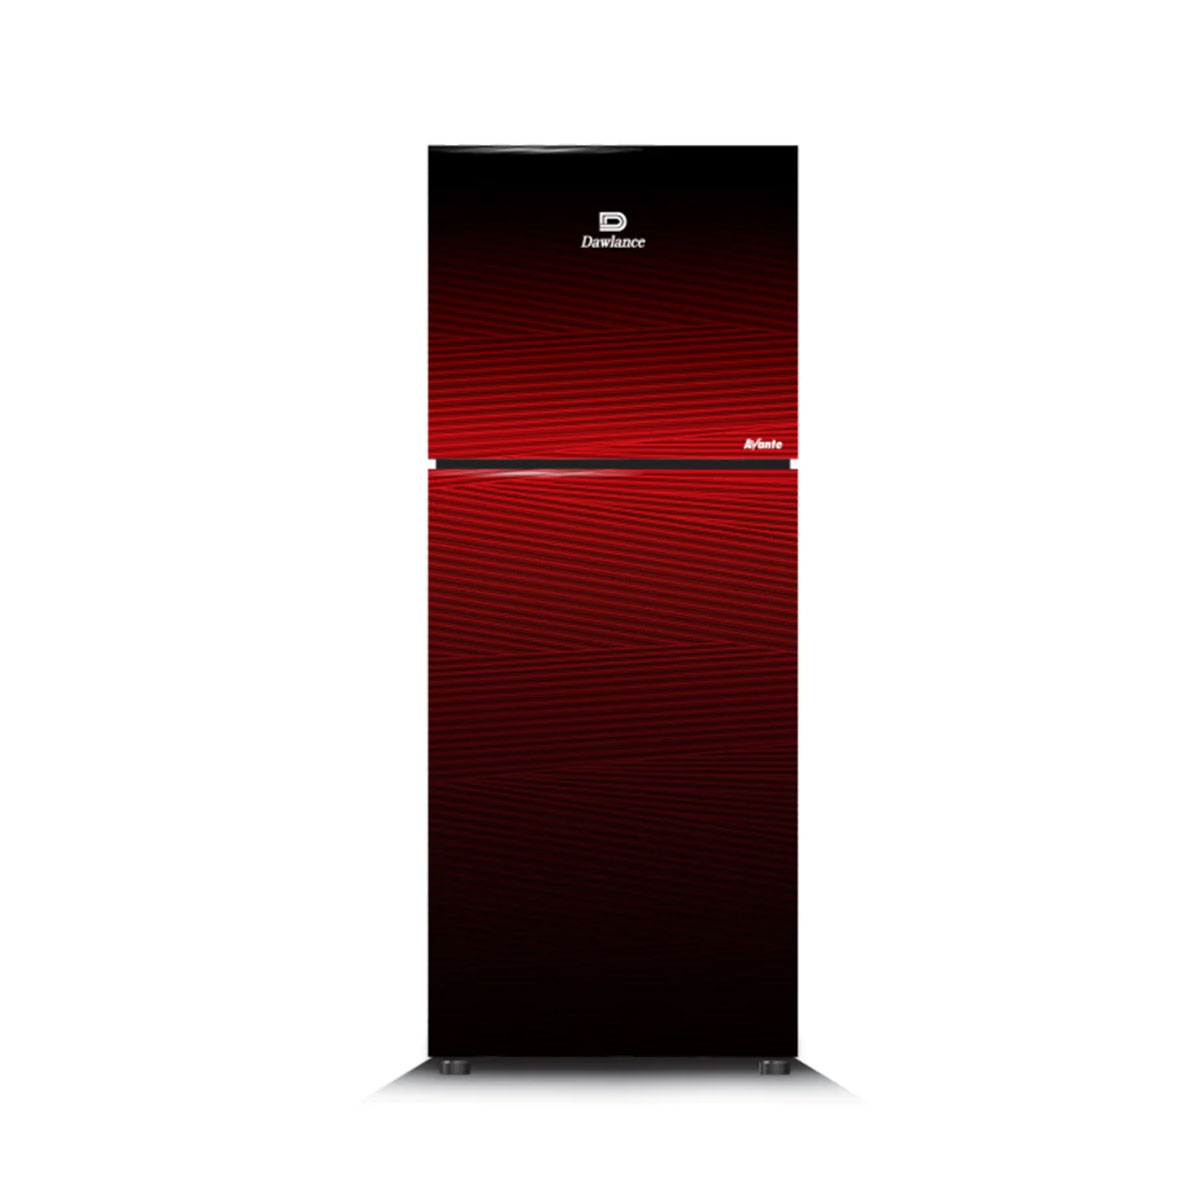 Dawlance Refrigerator 9173 Avante Noir Red